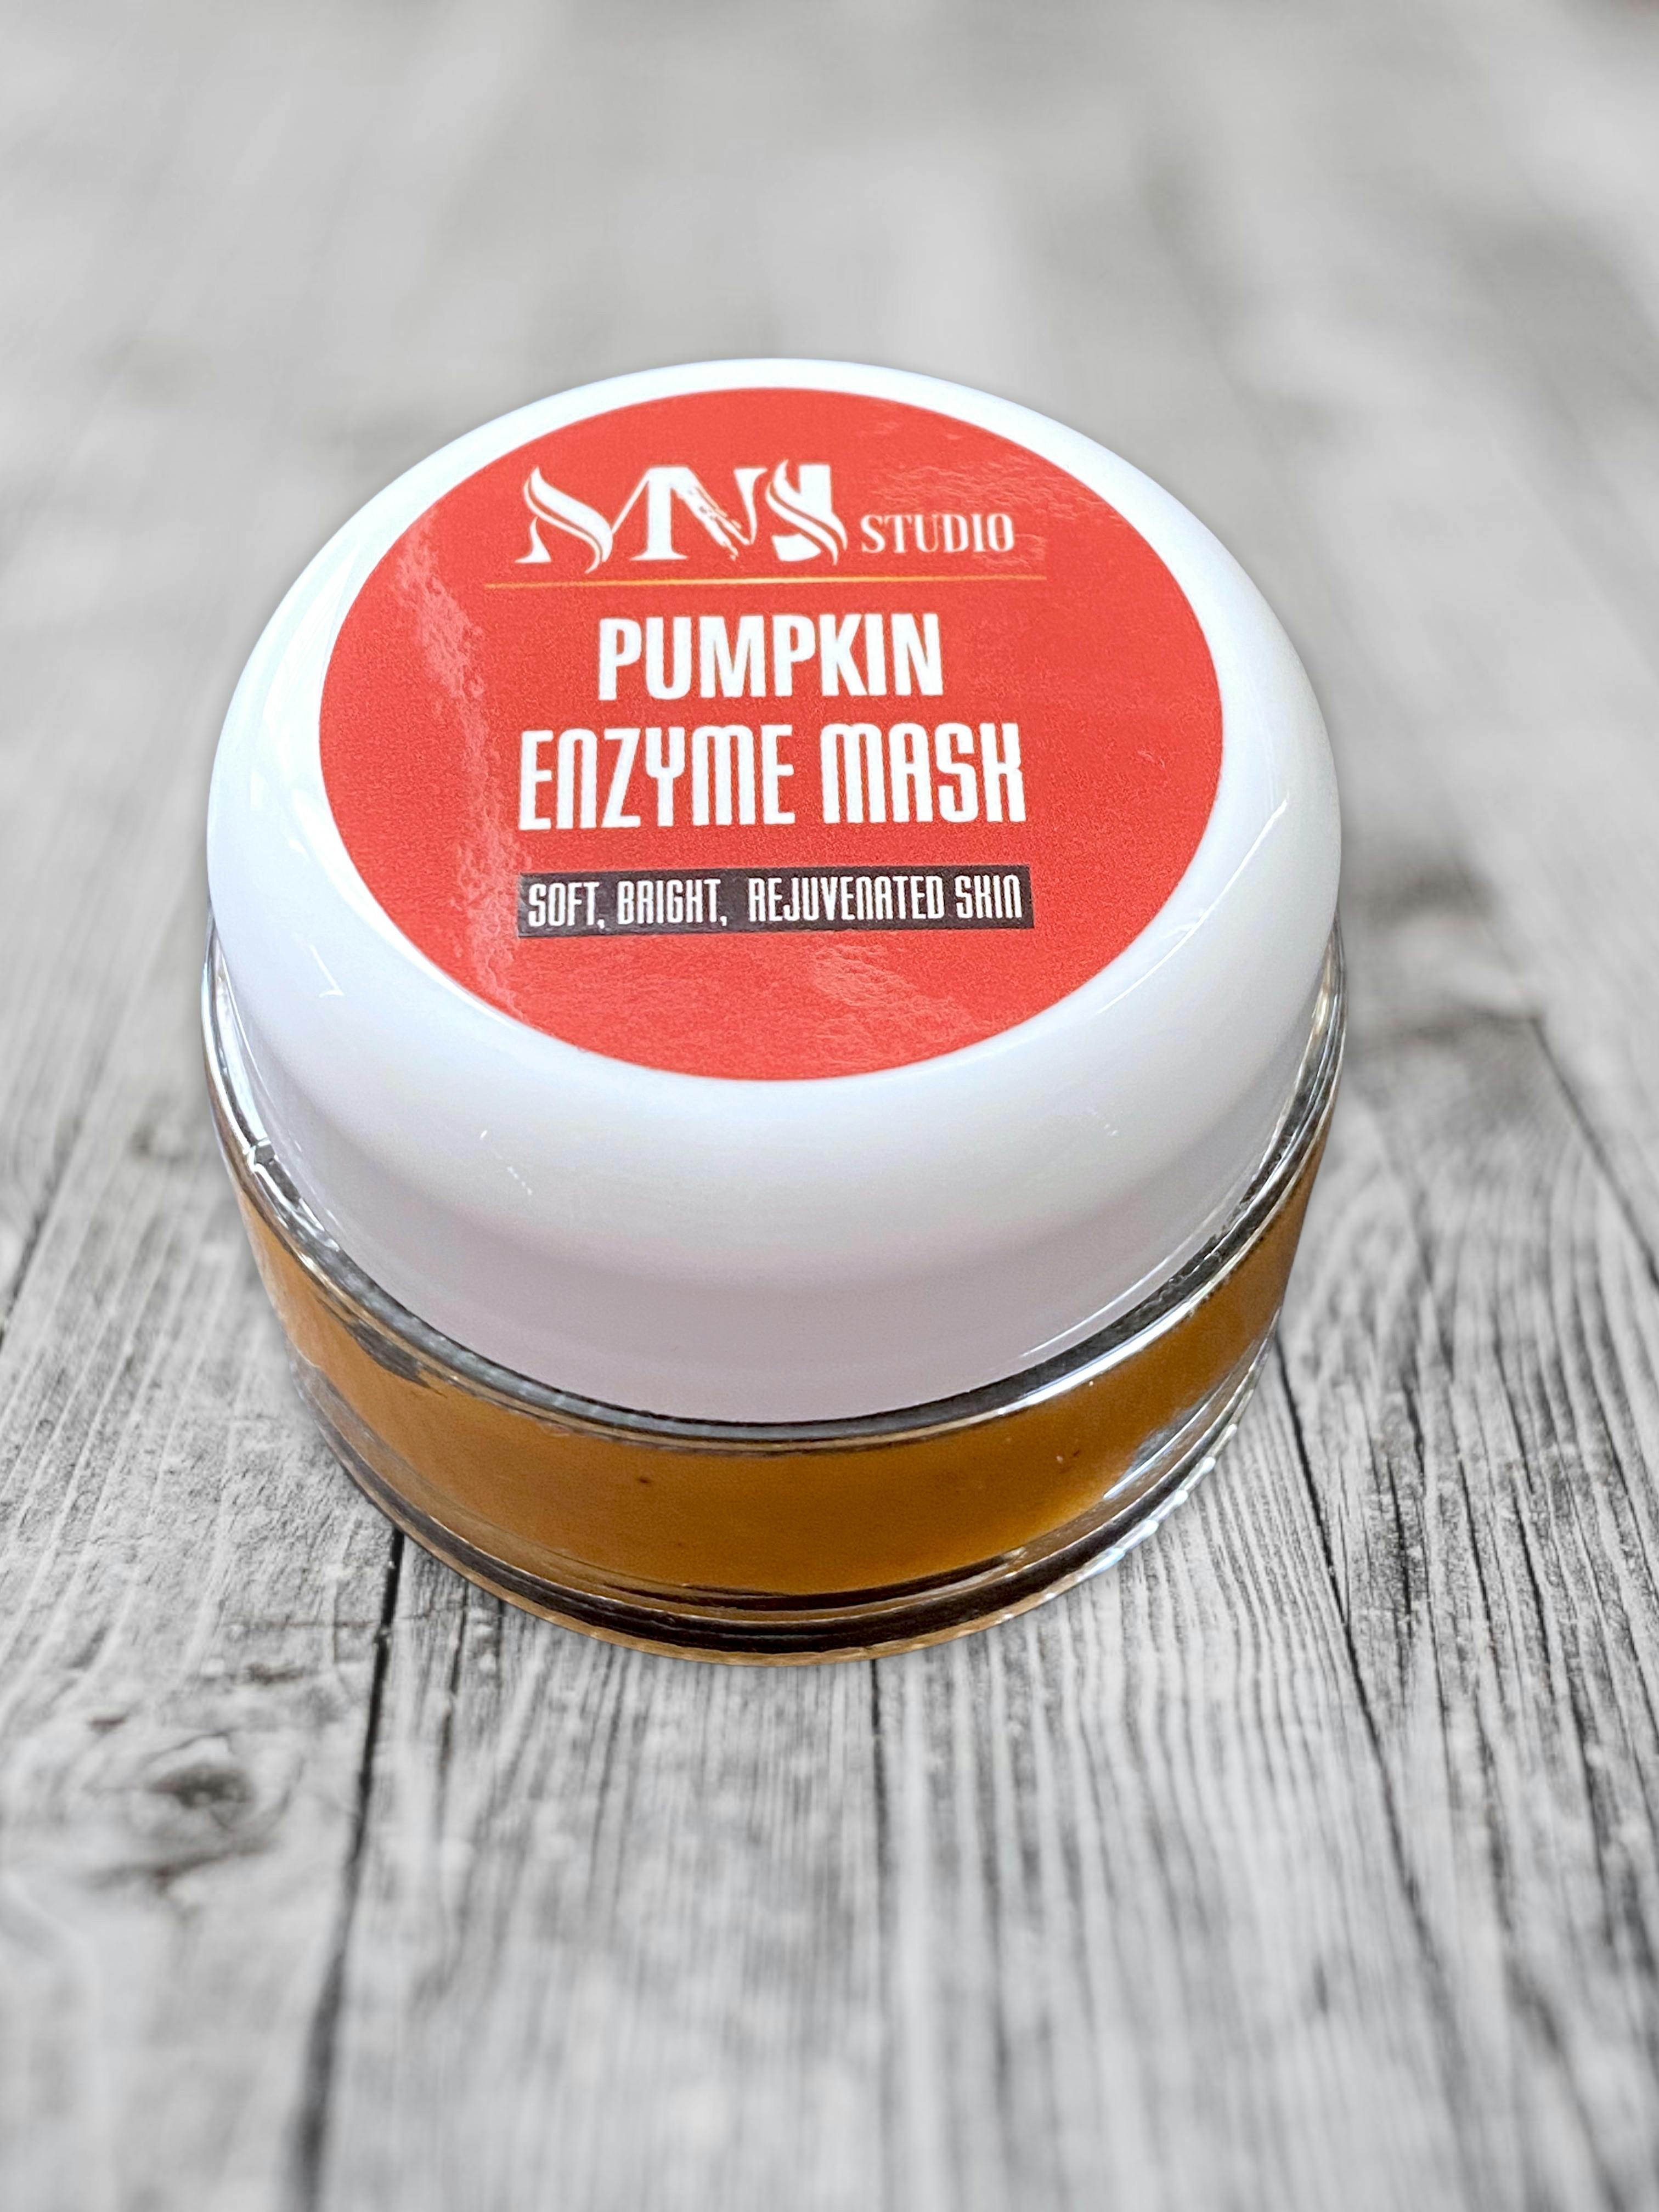 Pumpkin Enzyme Mask